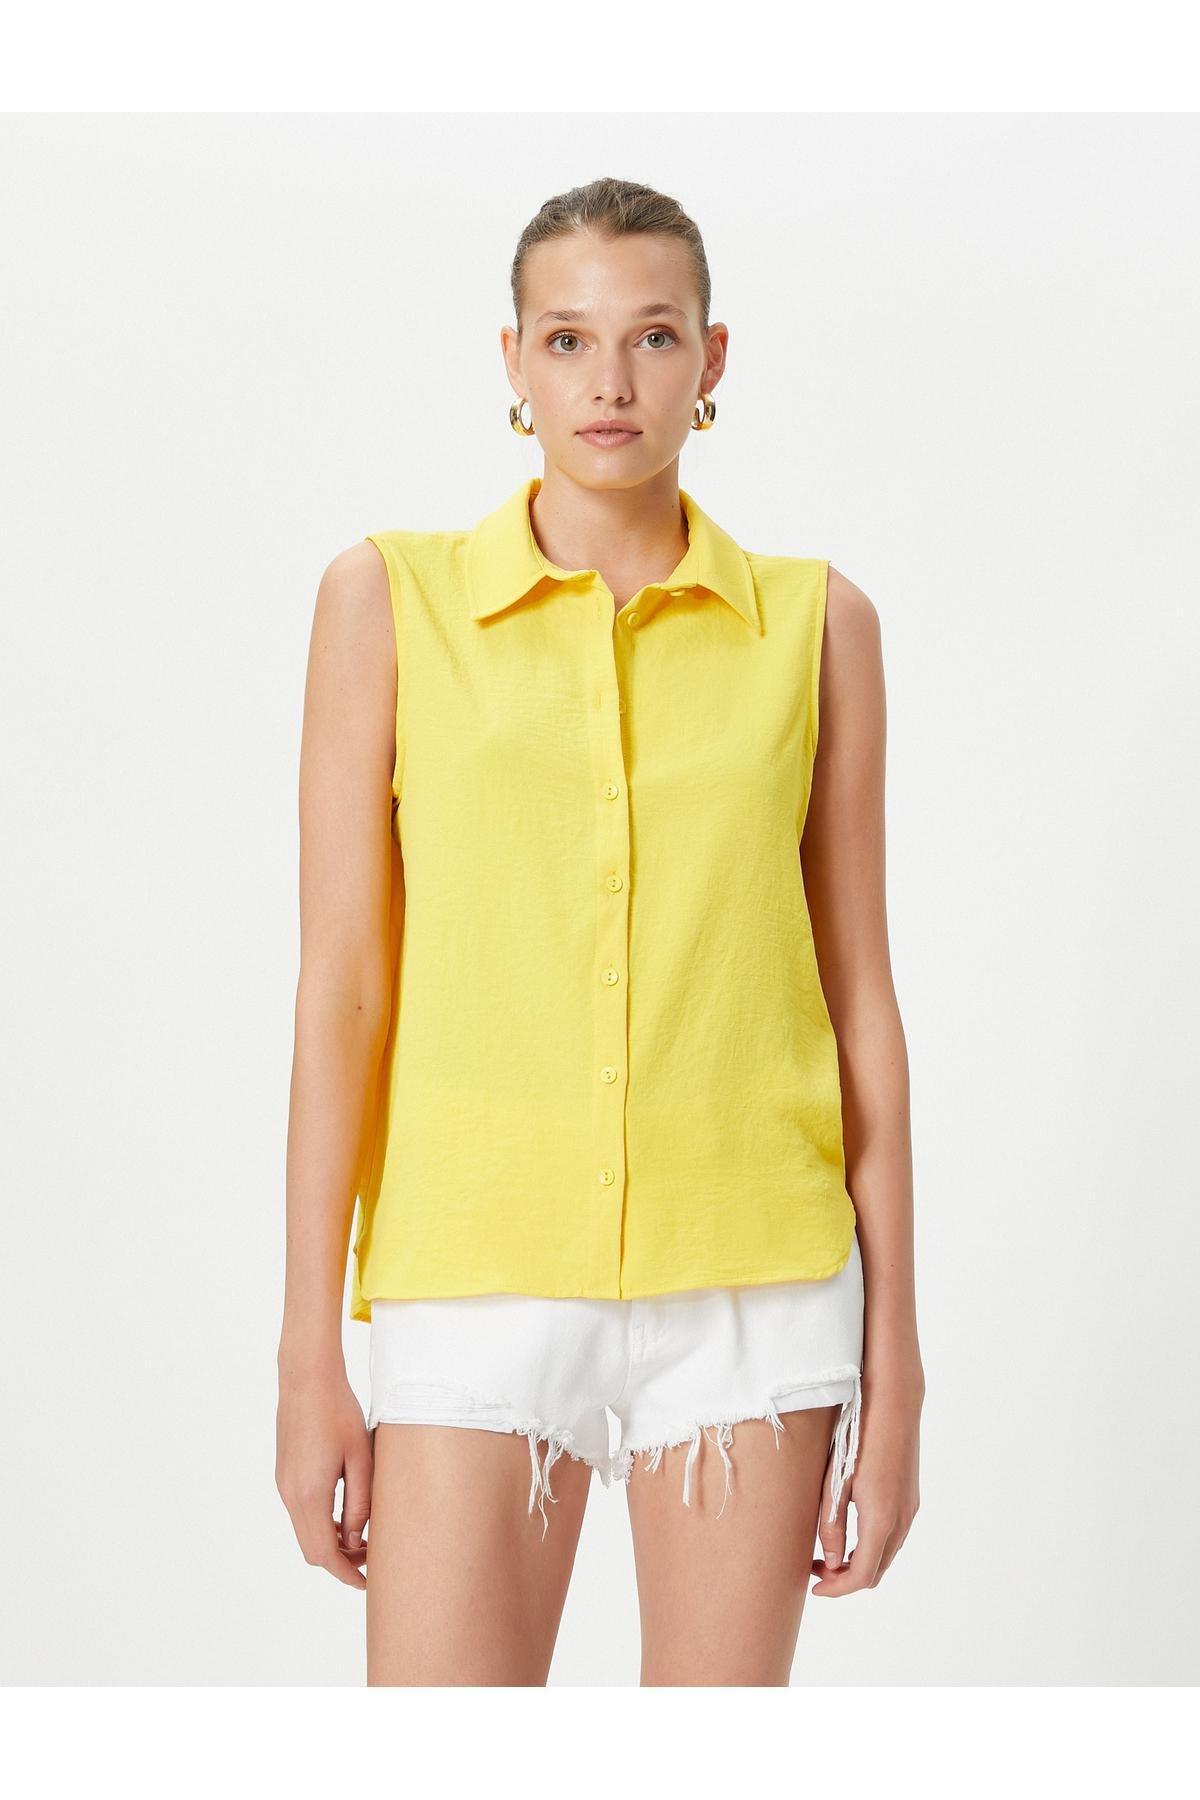 Koton - Yellow Sleeveless Shirt